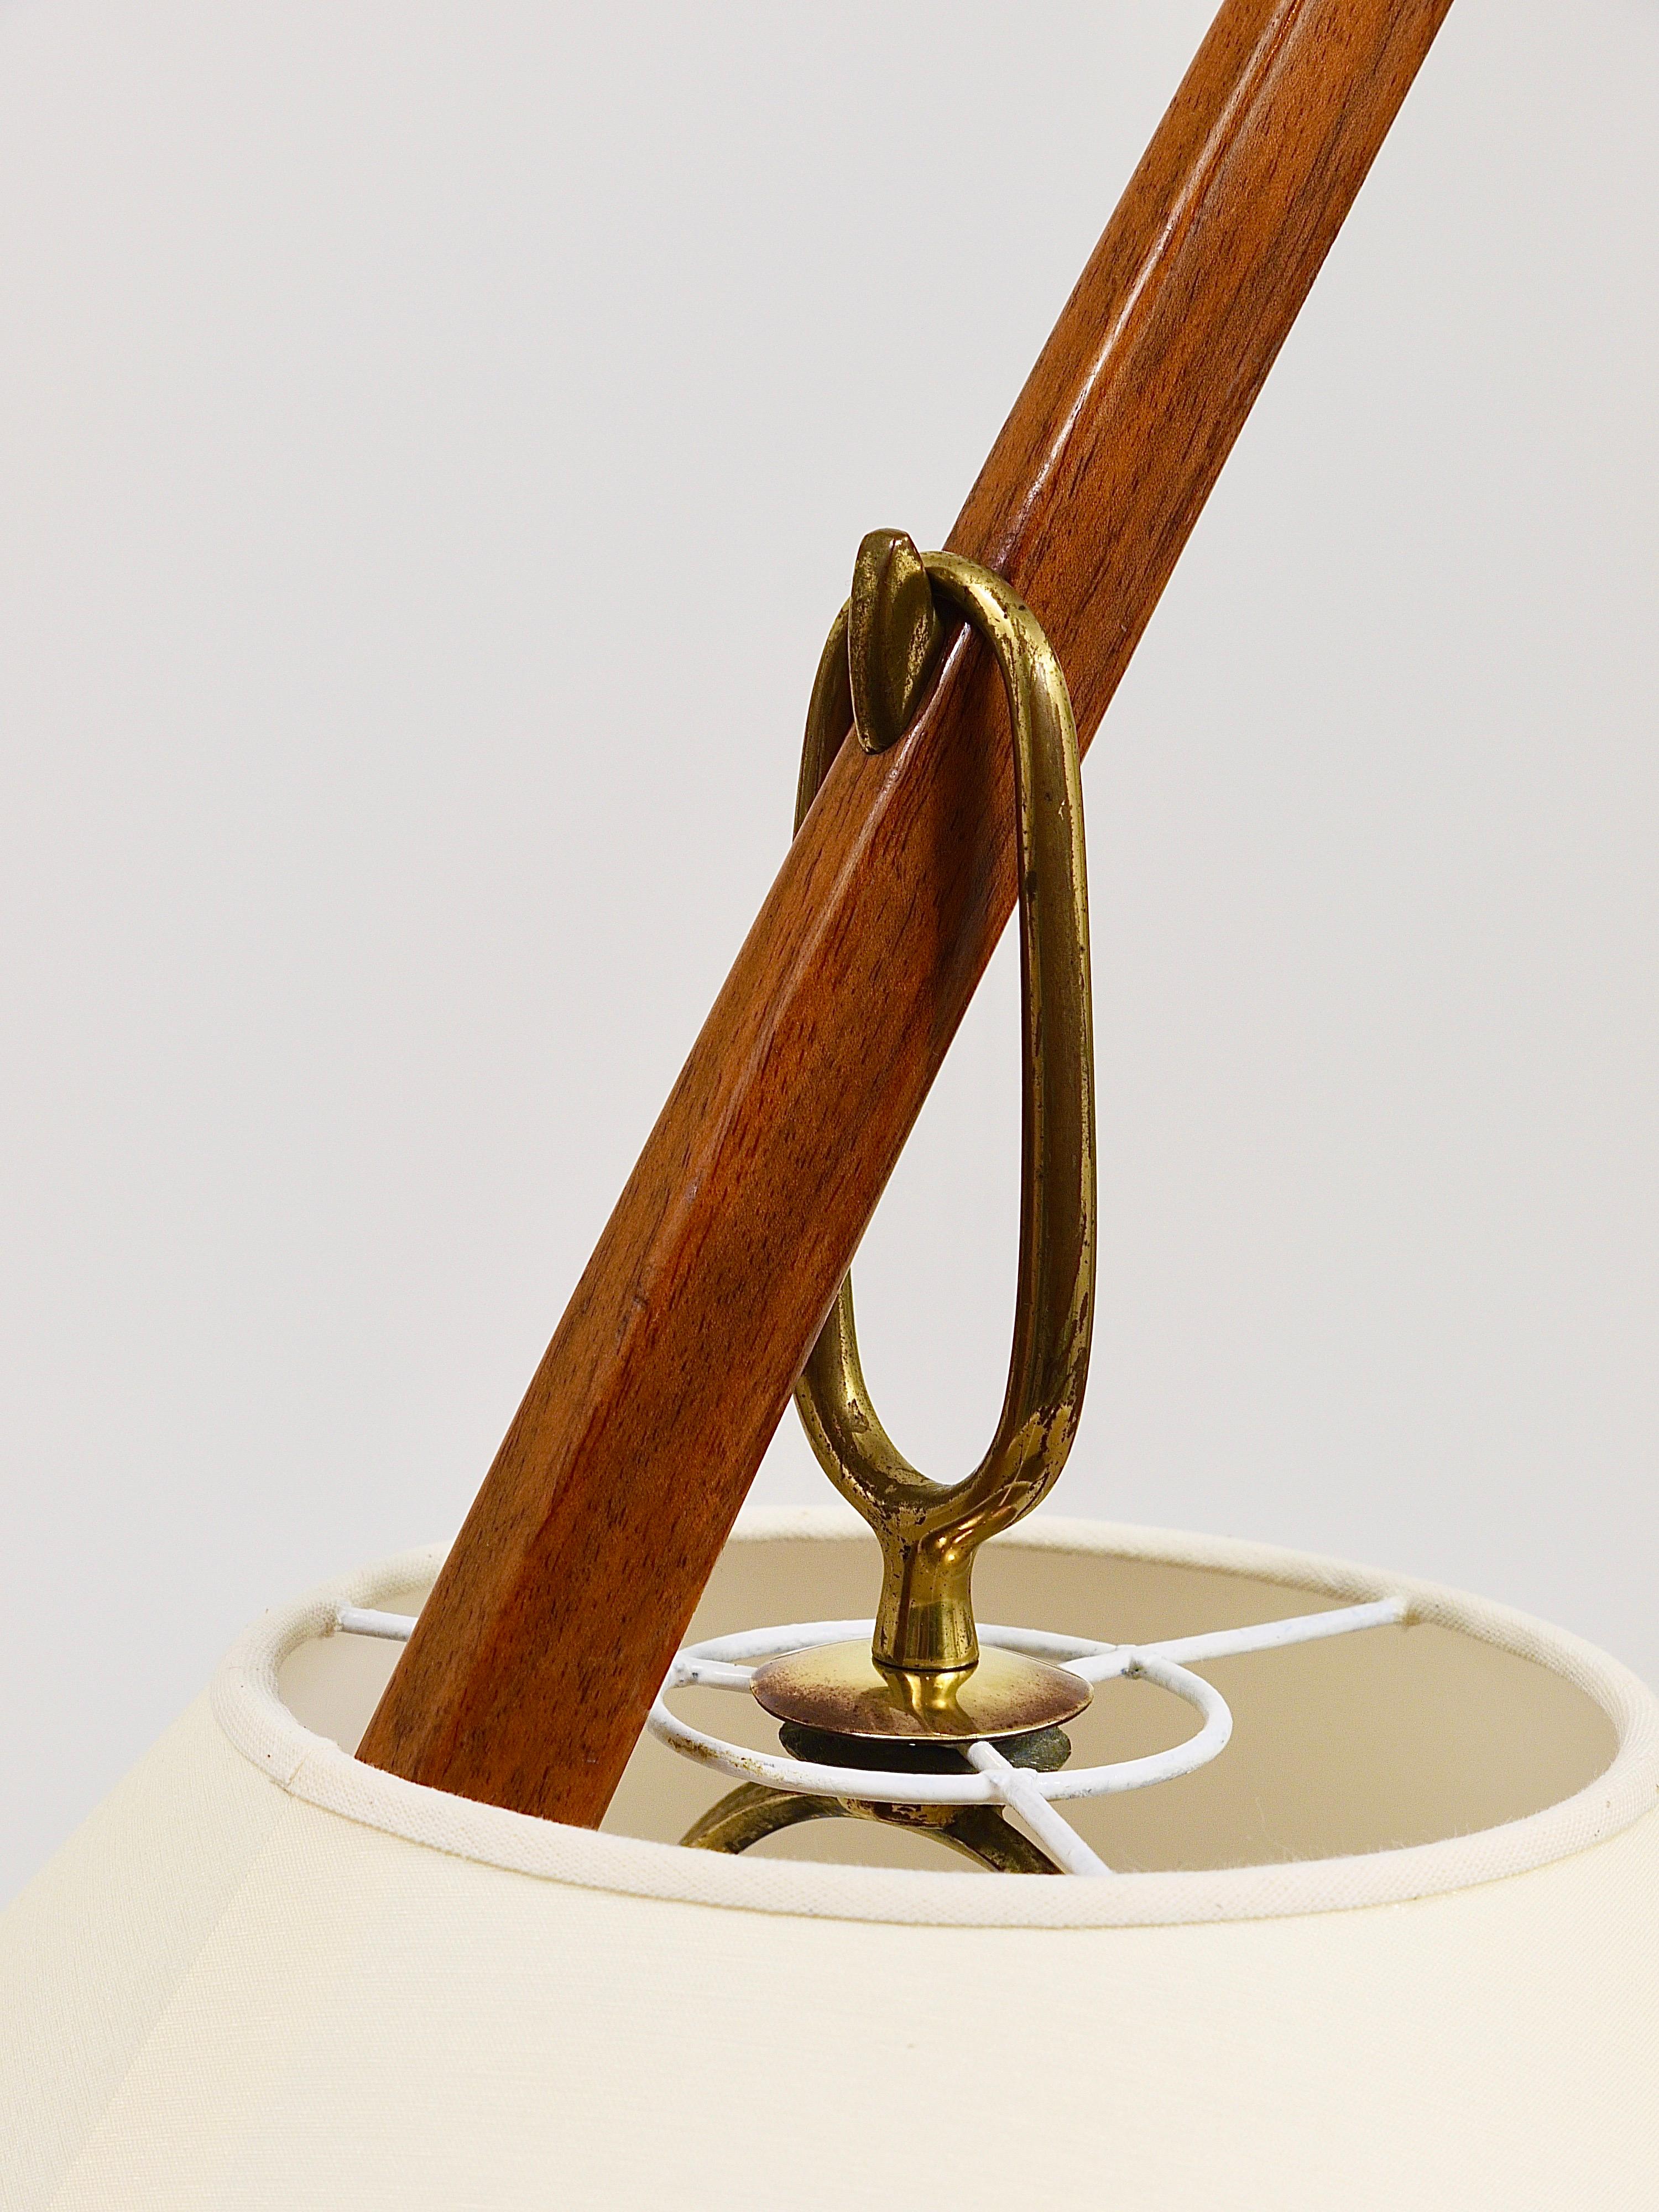 J.T. Kalmar 2x Dornstab Adjustable Floor Lamp, Brass, Walnut, Austria, 1950s For Sale 2